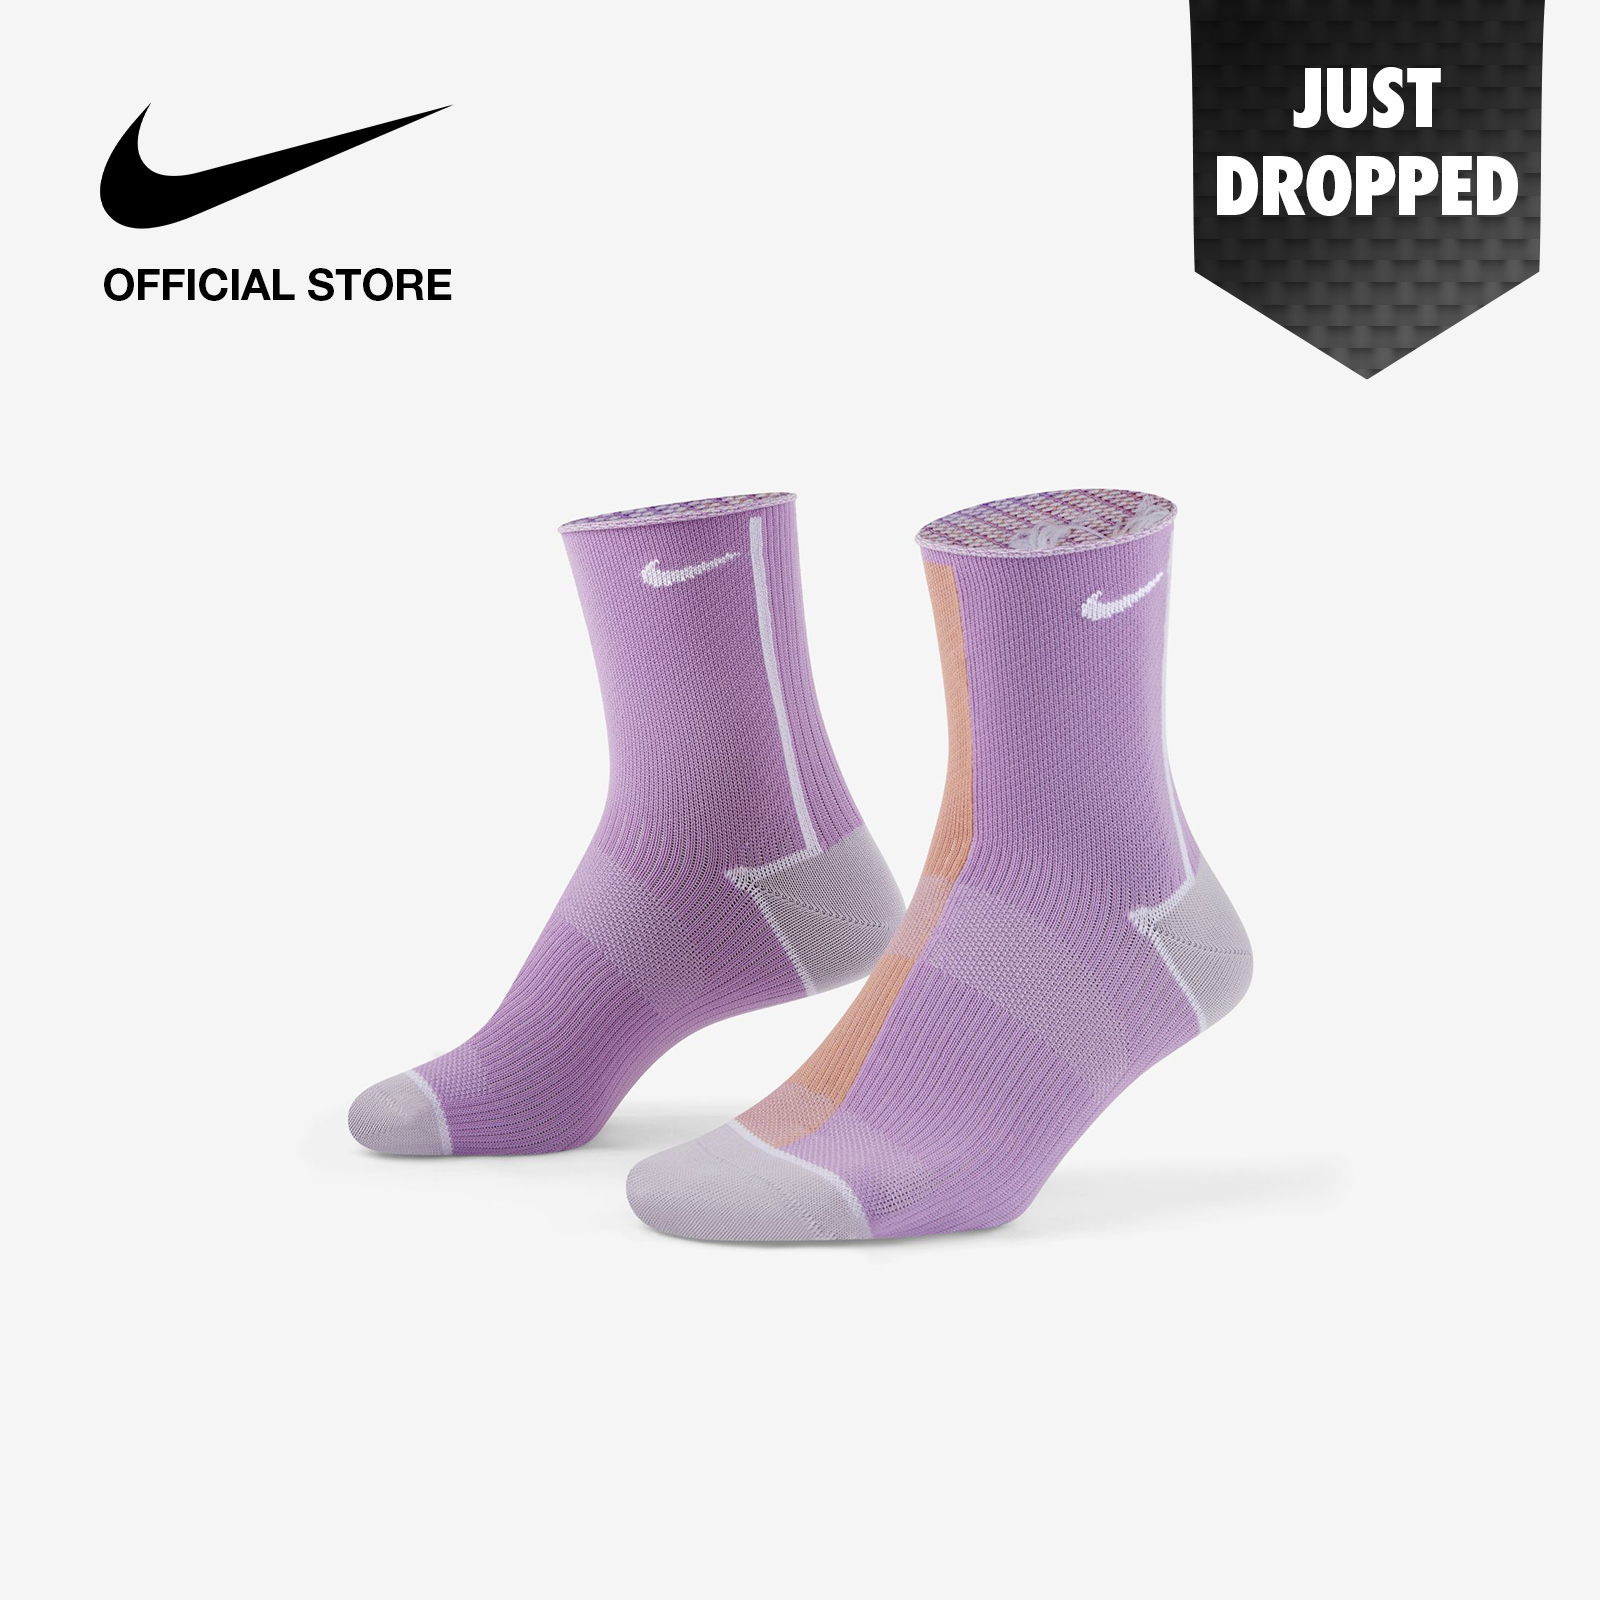 Nike Women's Everyday Plus Lightweight Training Sports Socks (3 pairs) - Multi-Color